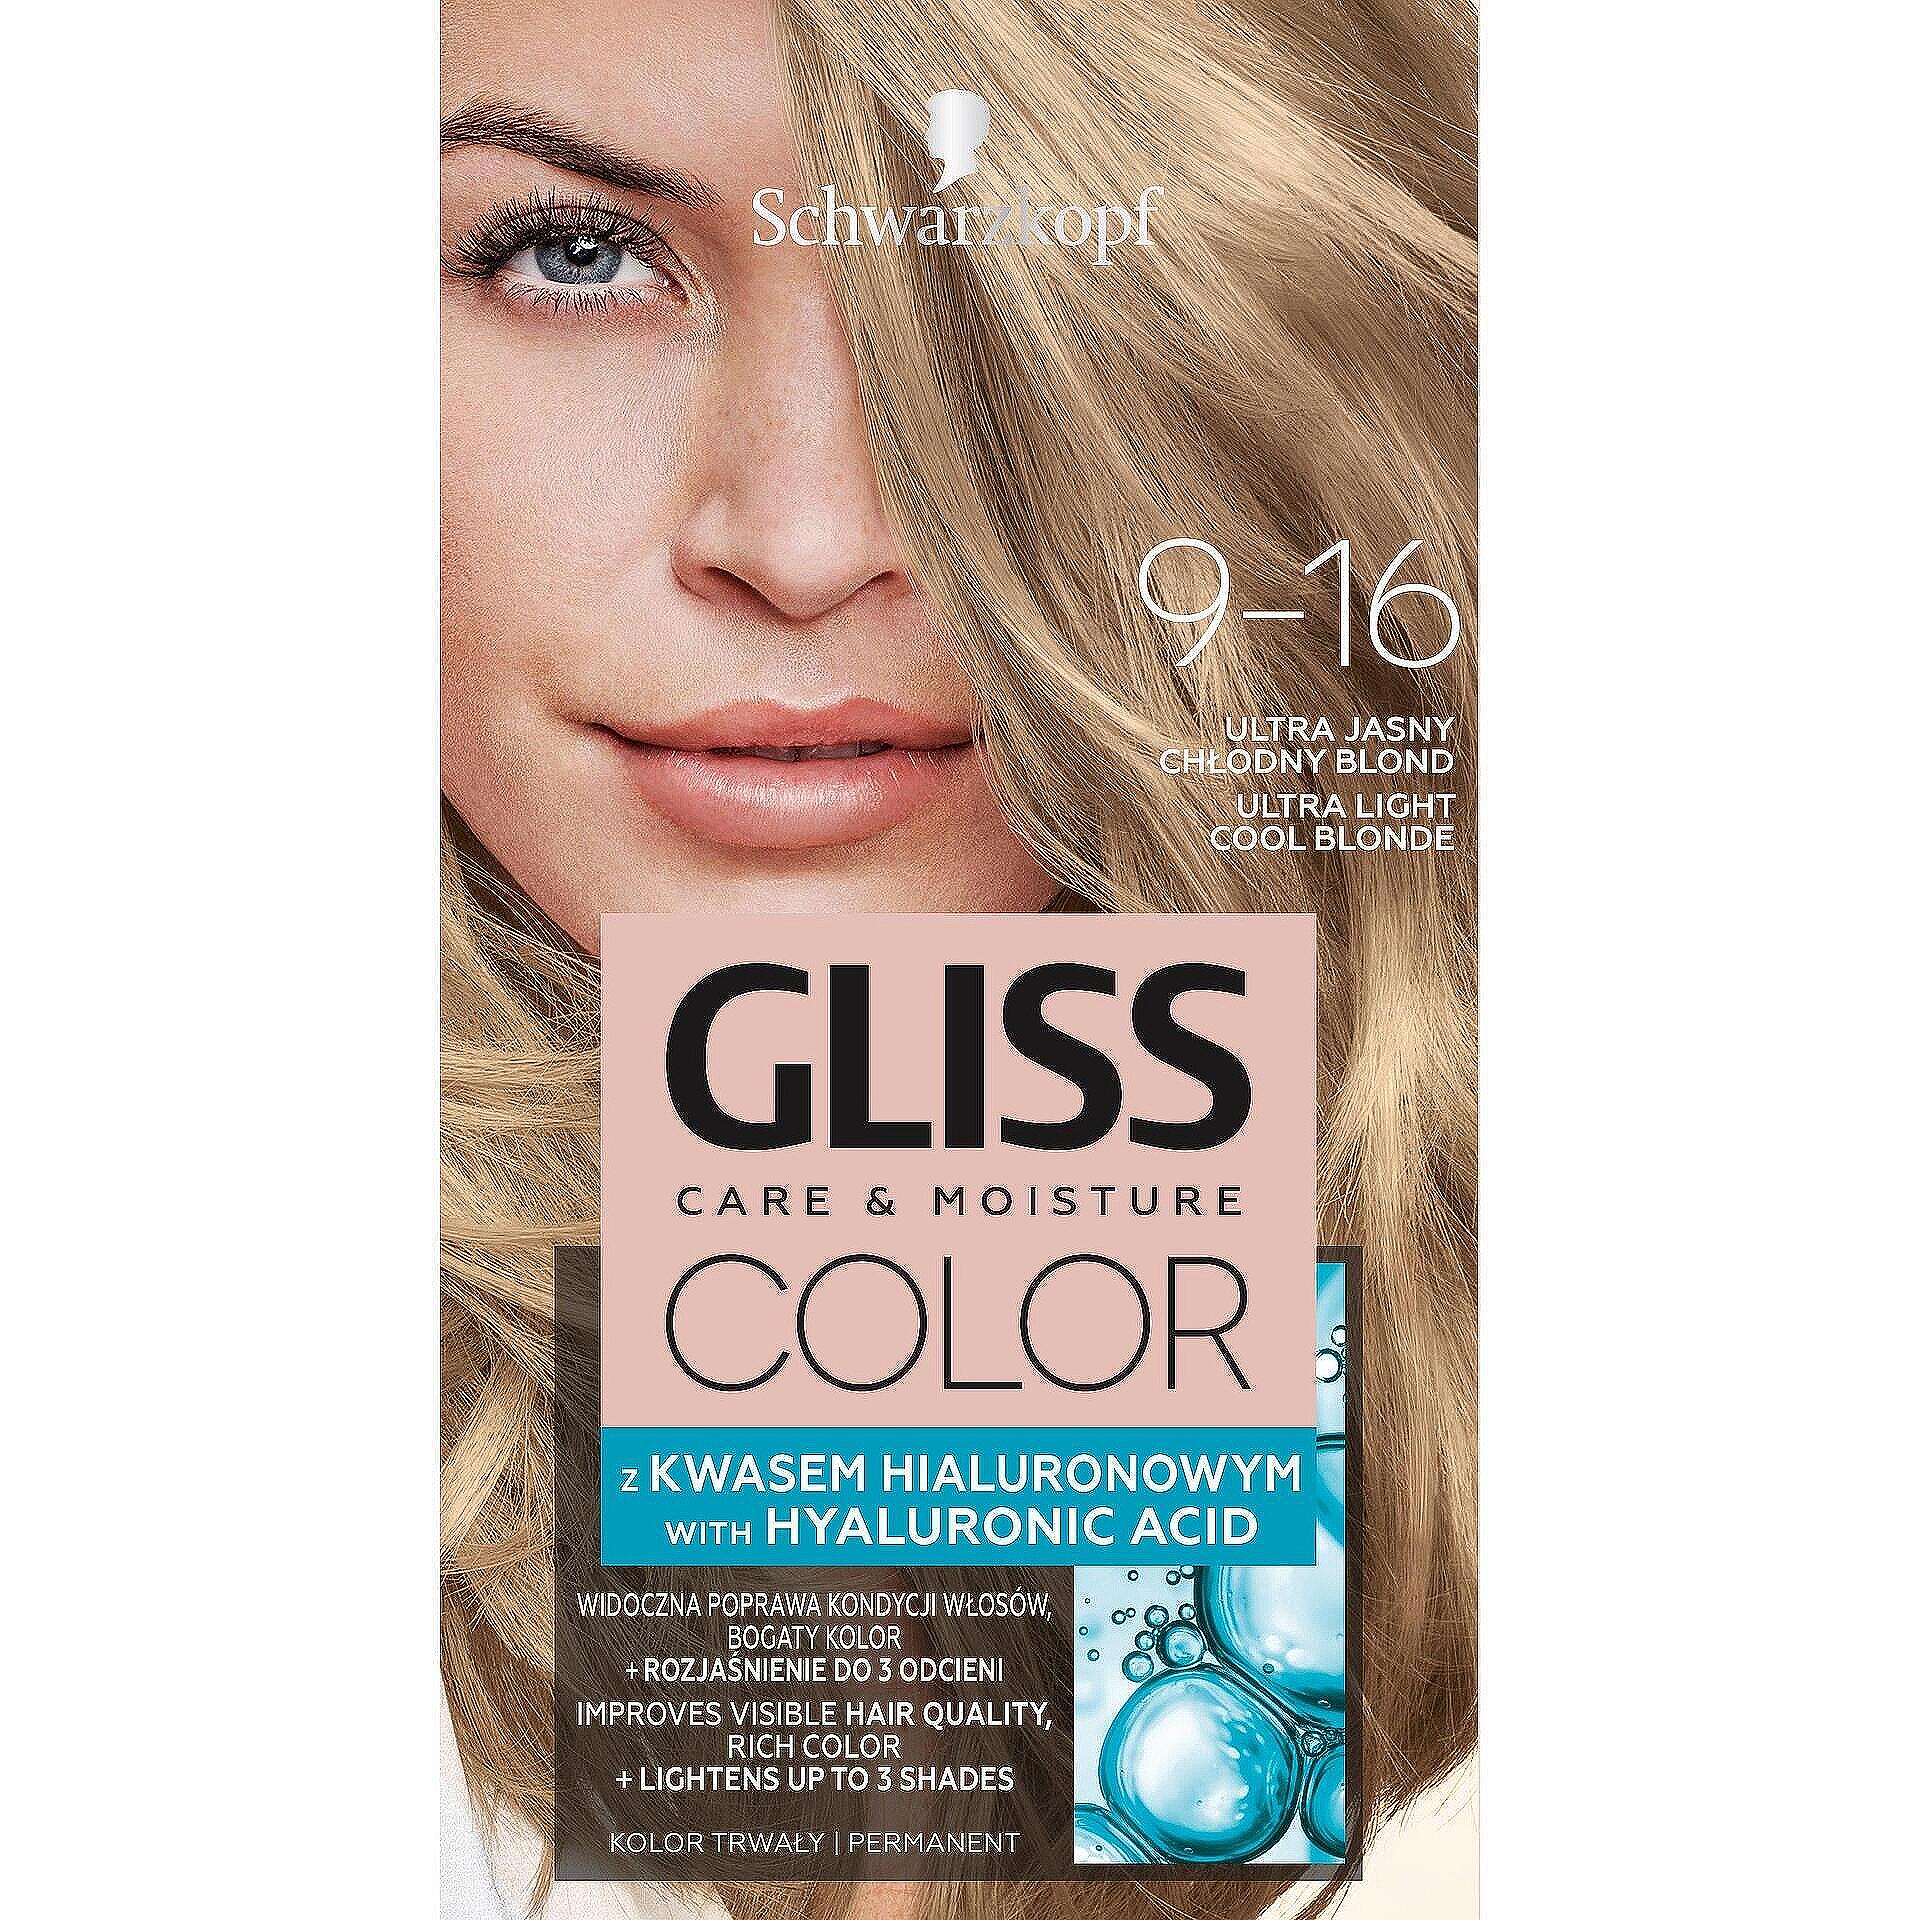 Gliss Color боя за коса ултра светло хладно рус, 9-16 | 1 бр.